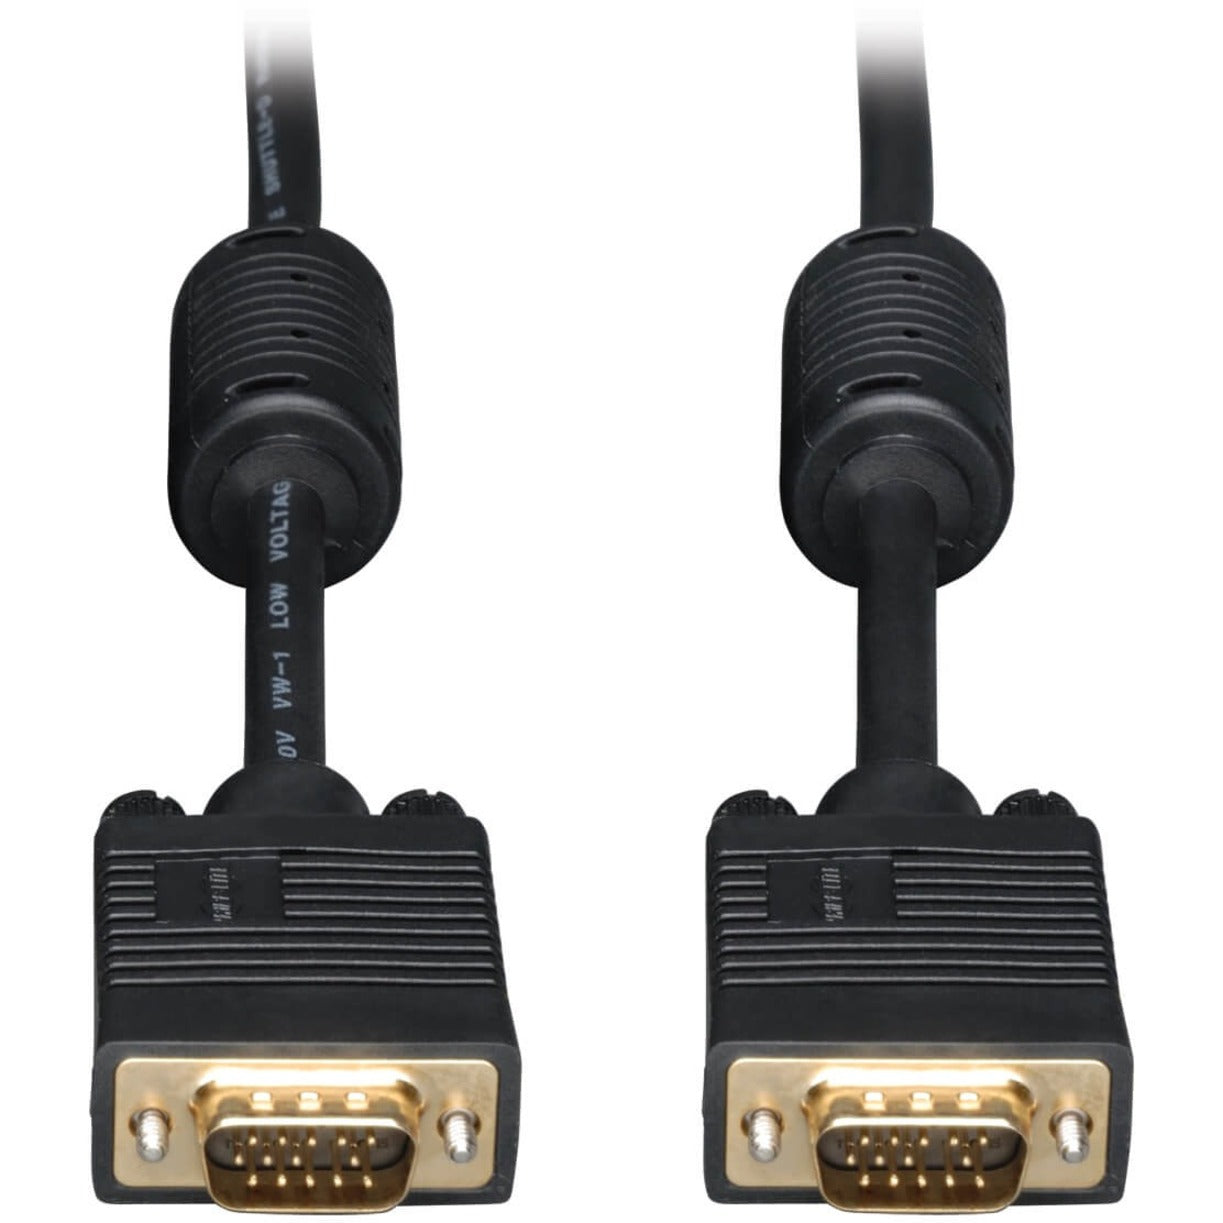 Tripp Lite P502-050 Video Cable, 50FT SVGA/VGA REPL MONITOR CABLE HD15M/M GOLD W/ RGB COAX